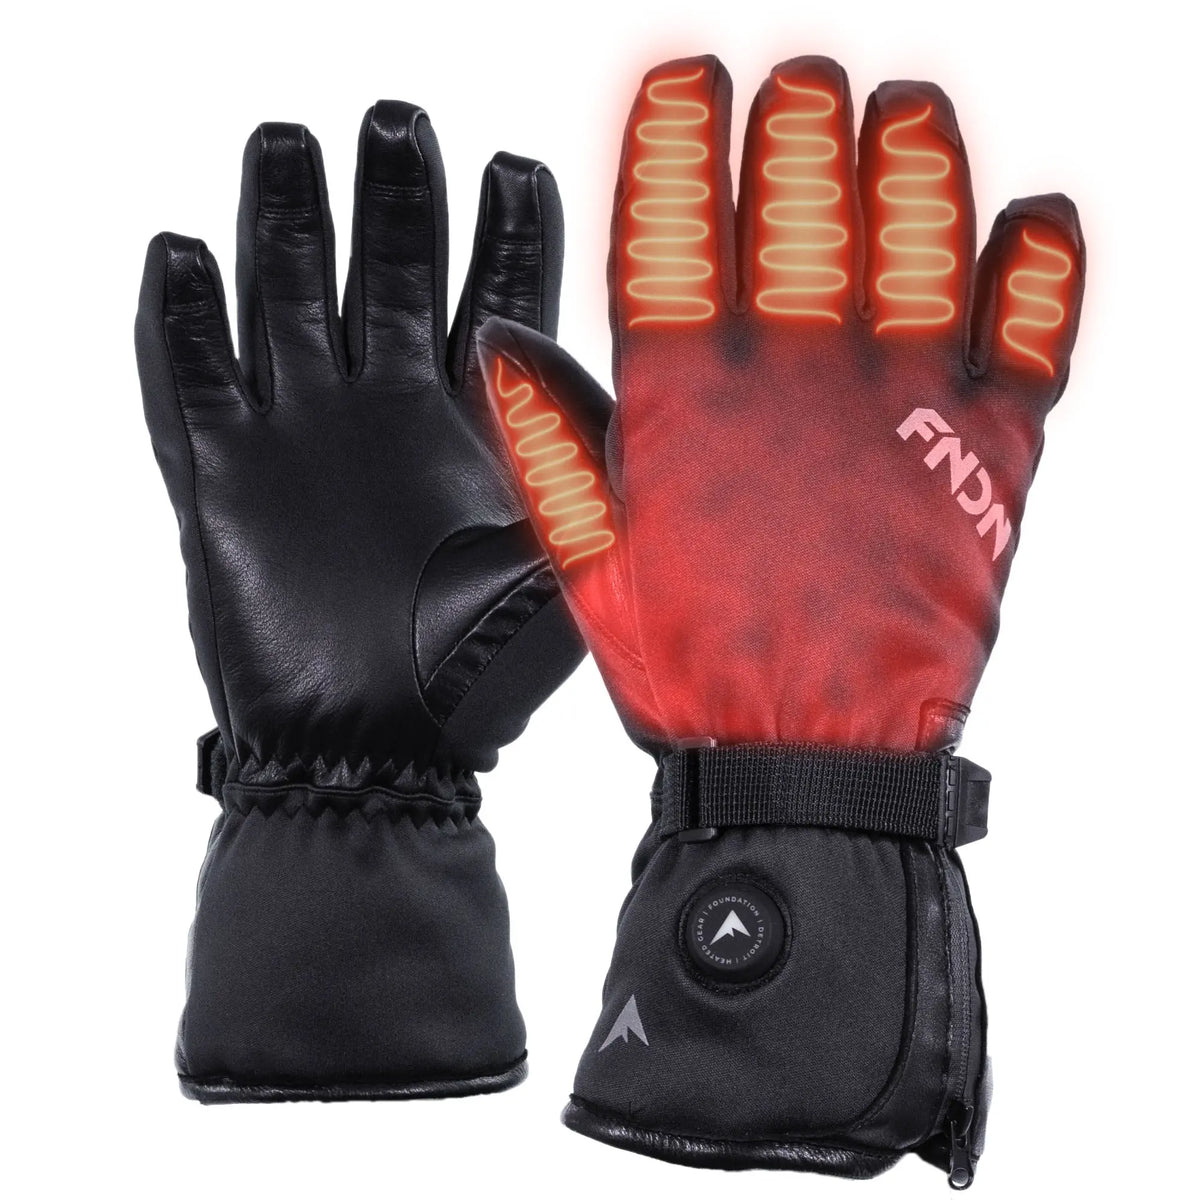 The FNDN G2 SnowPro Gloves